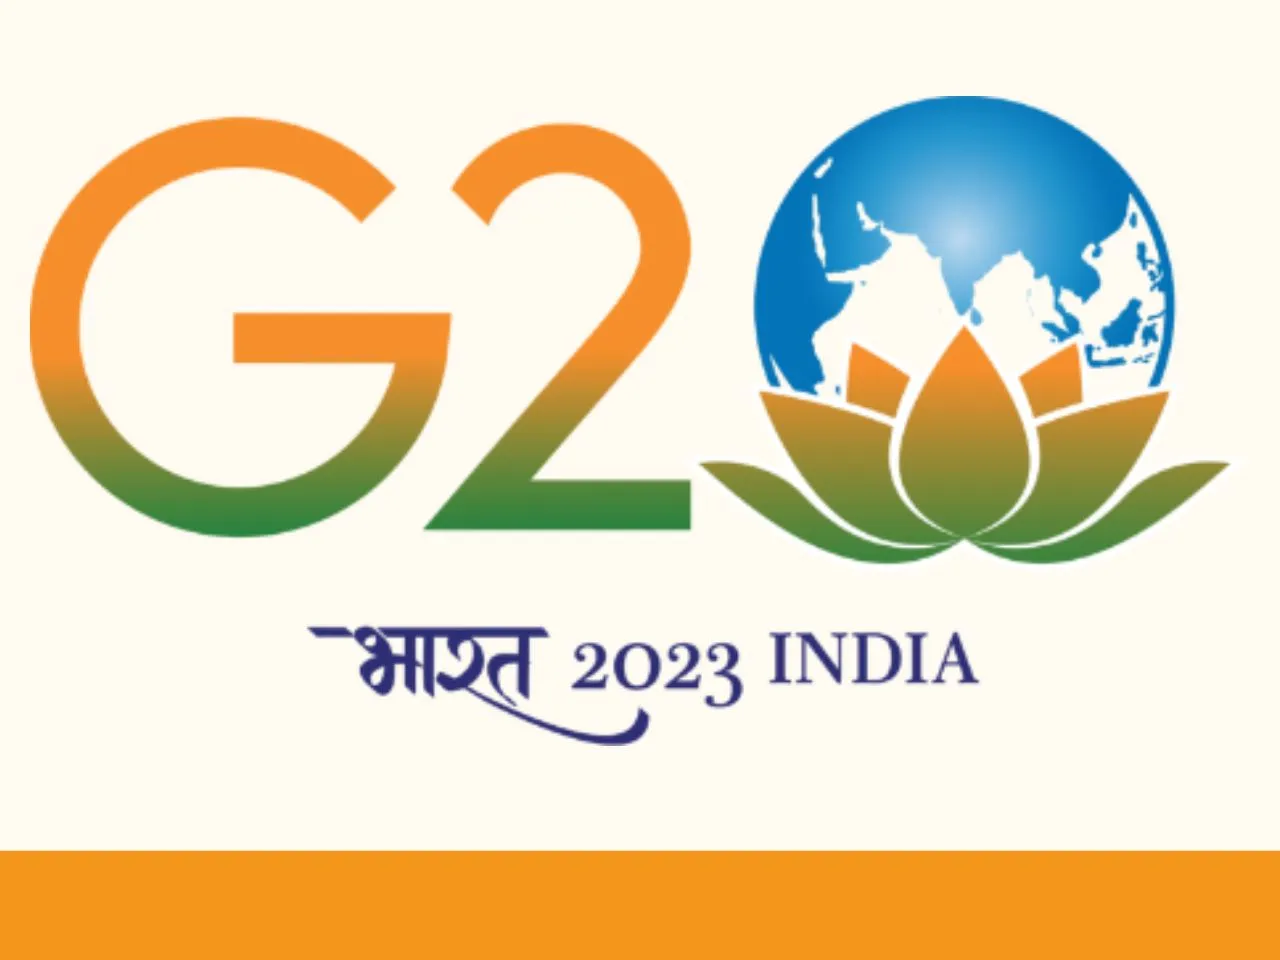 Bengaluru To Host 1st G20 FMCBG Meeting